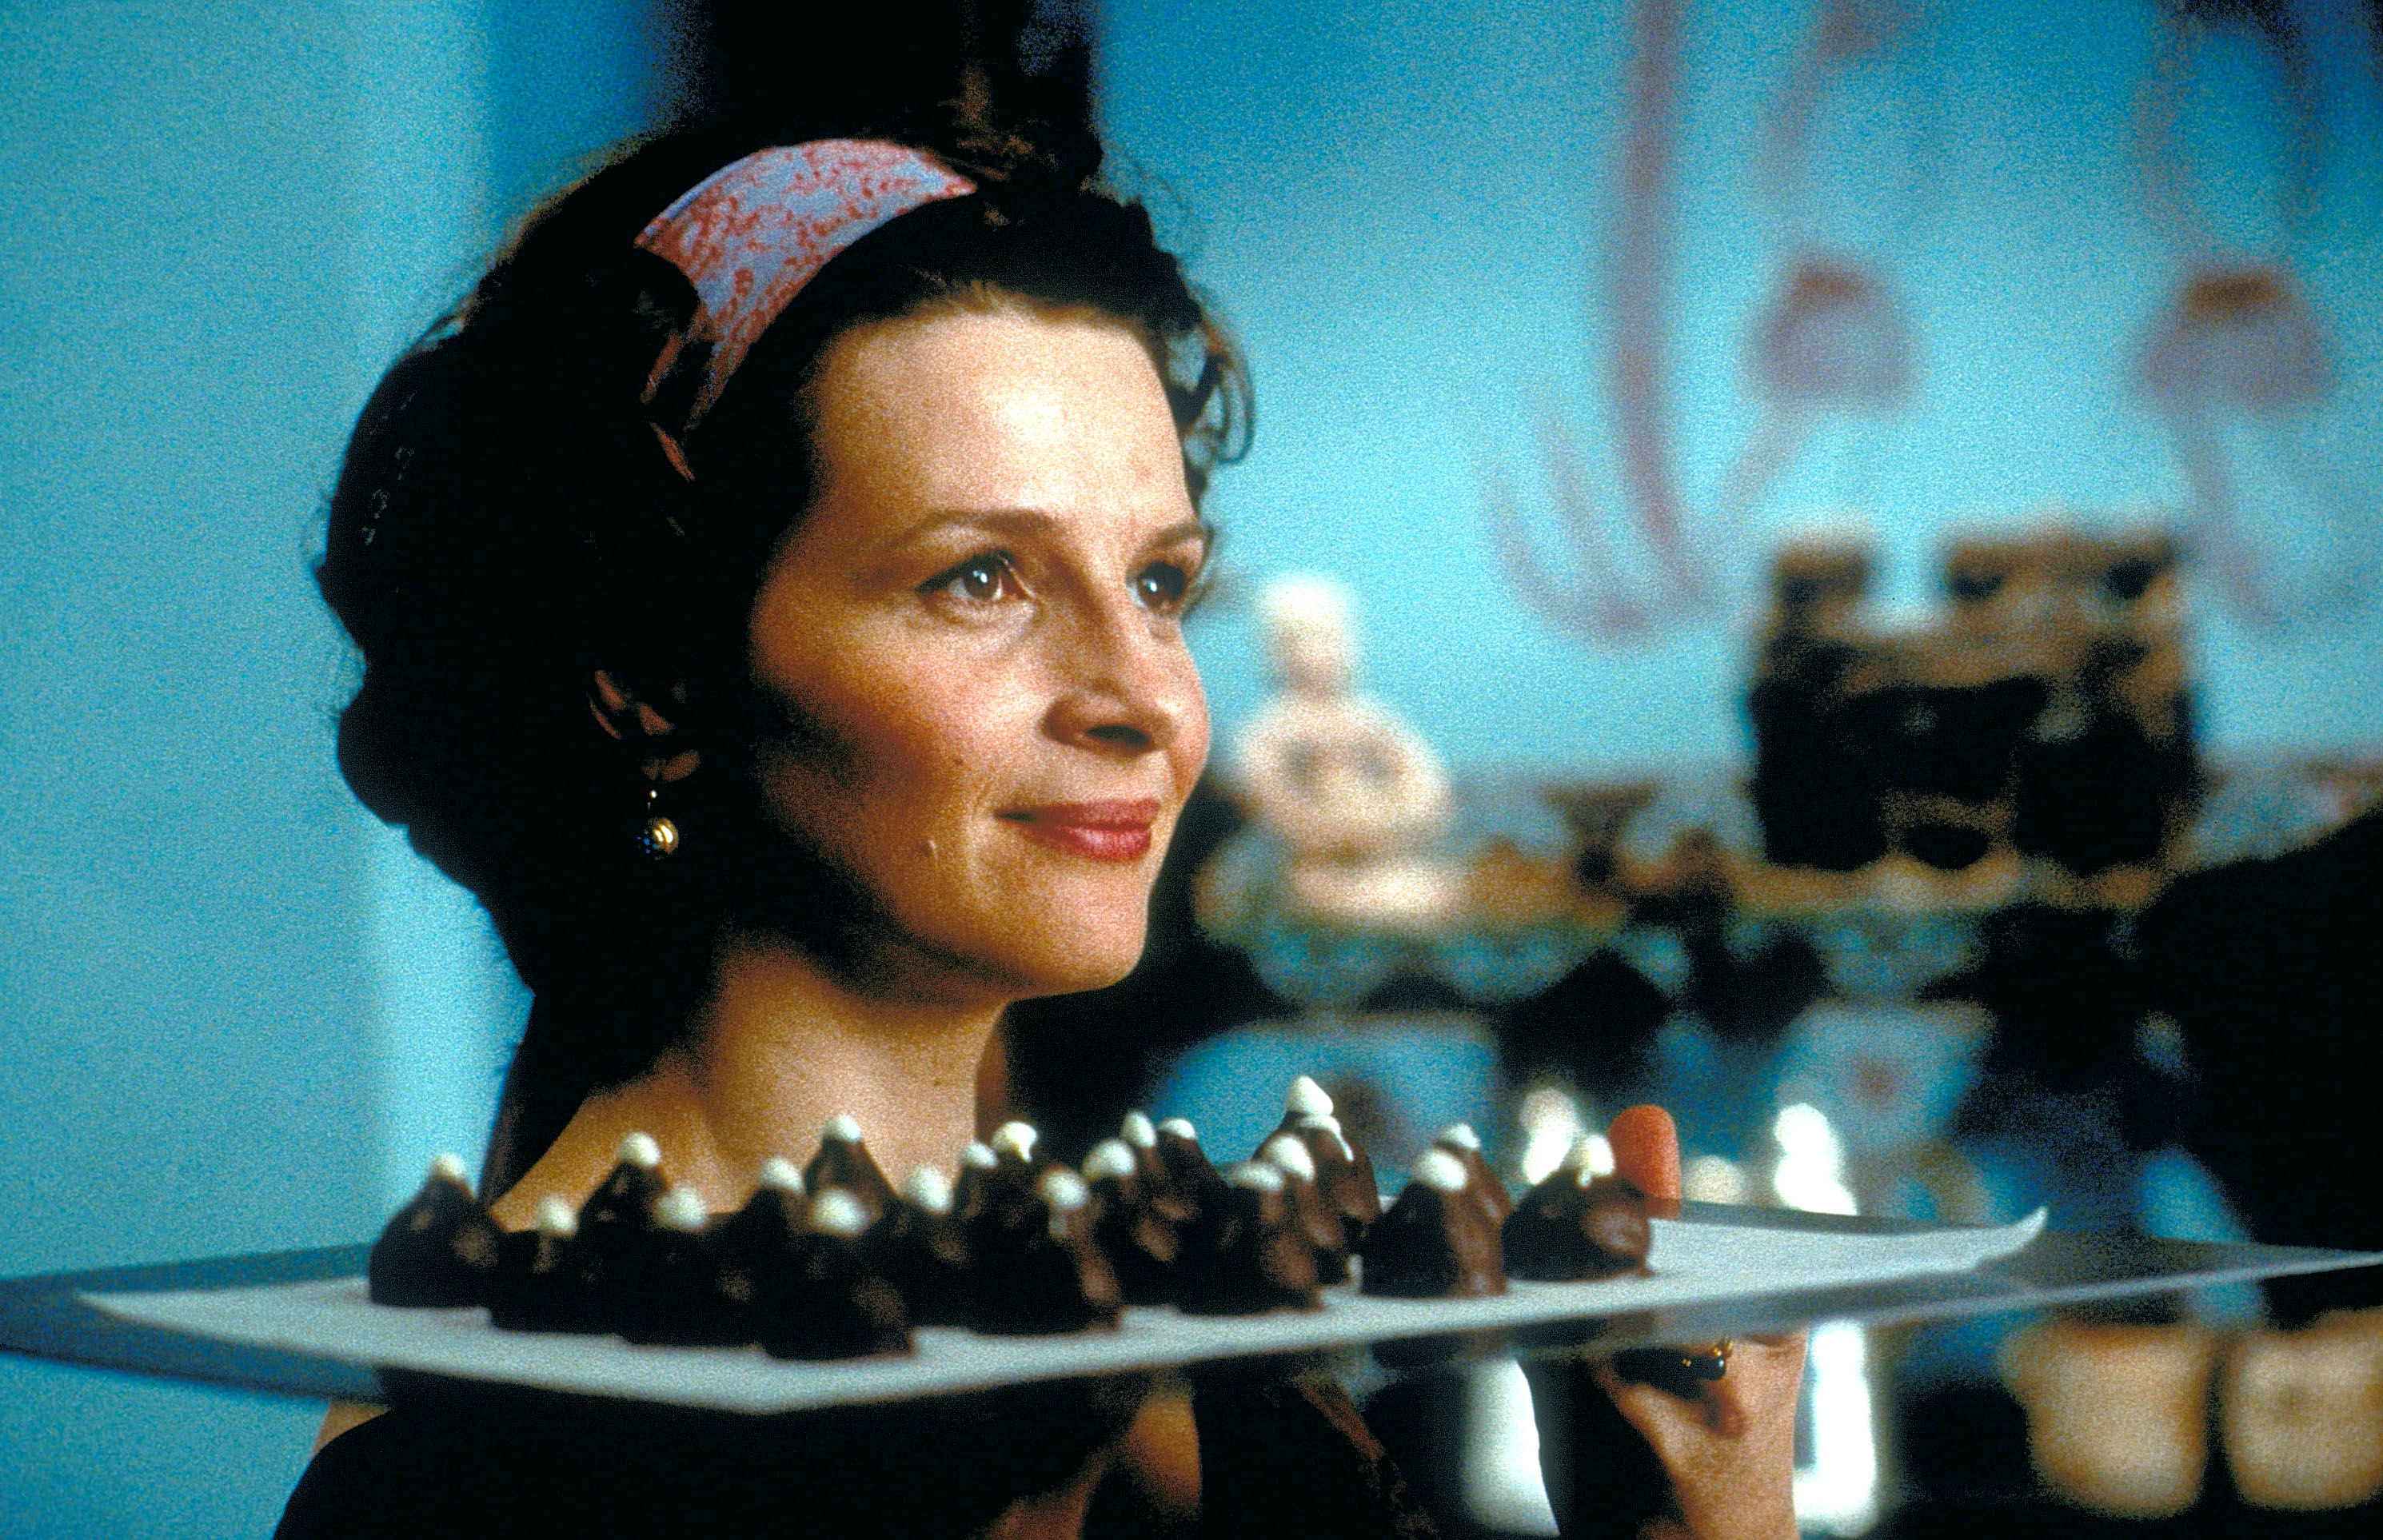 Juliette Binoche holds a tray of chocolats